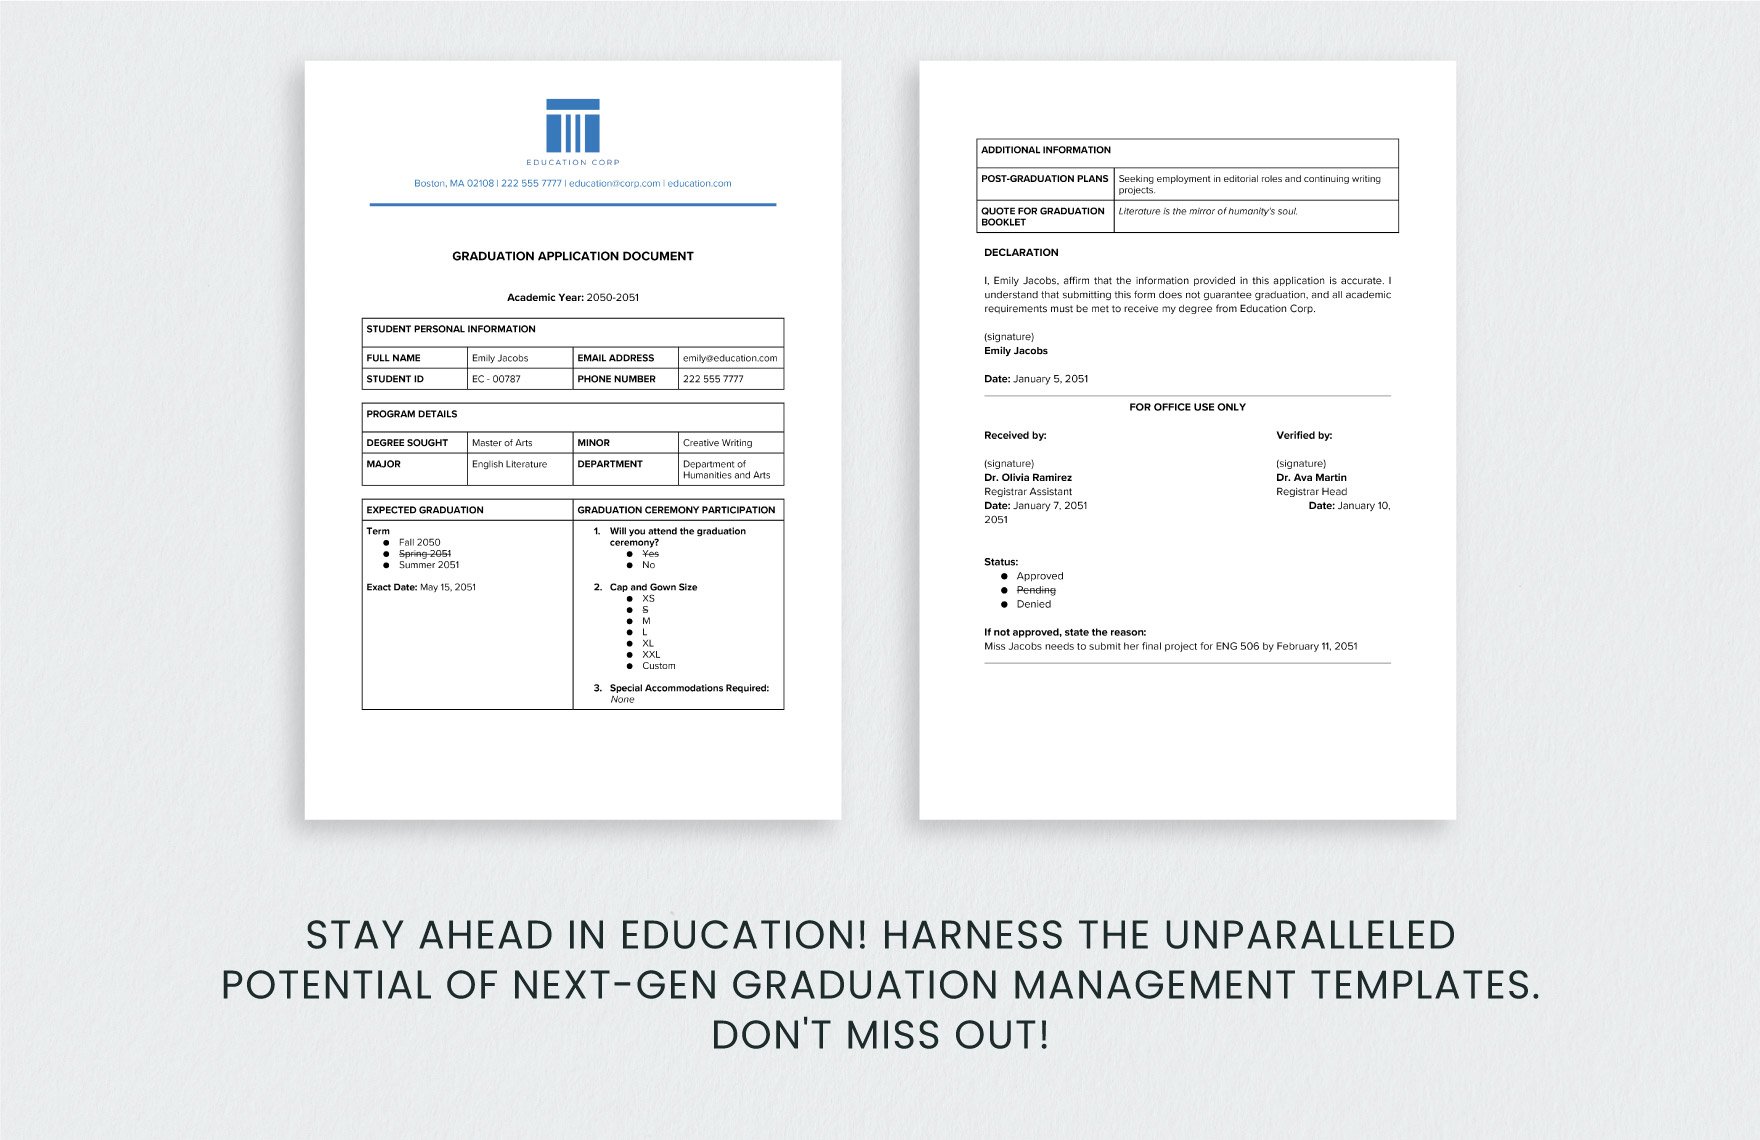 Graduation Application Document Template